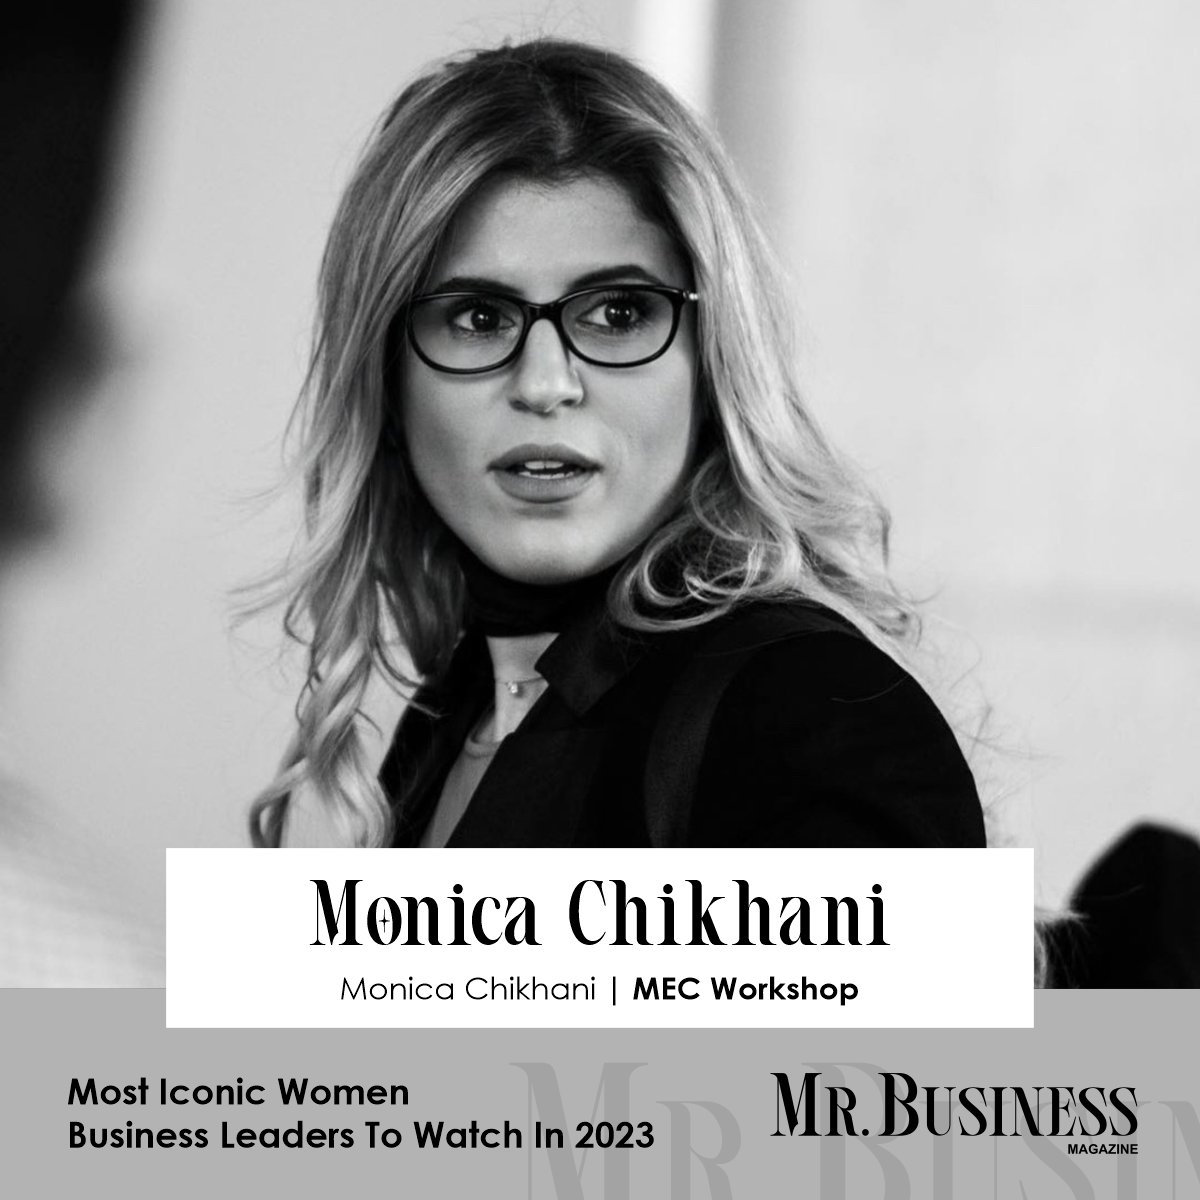 Monica Chikhani- Assisting Businesses | Mr. Business Magazine